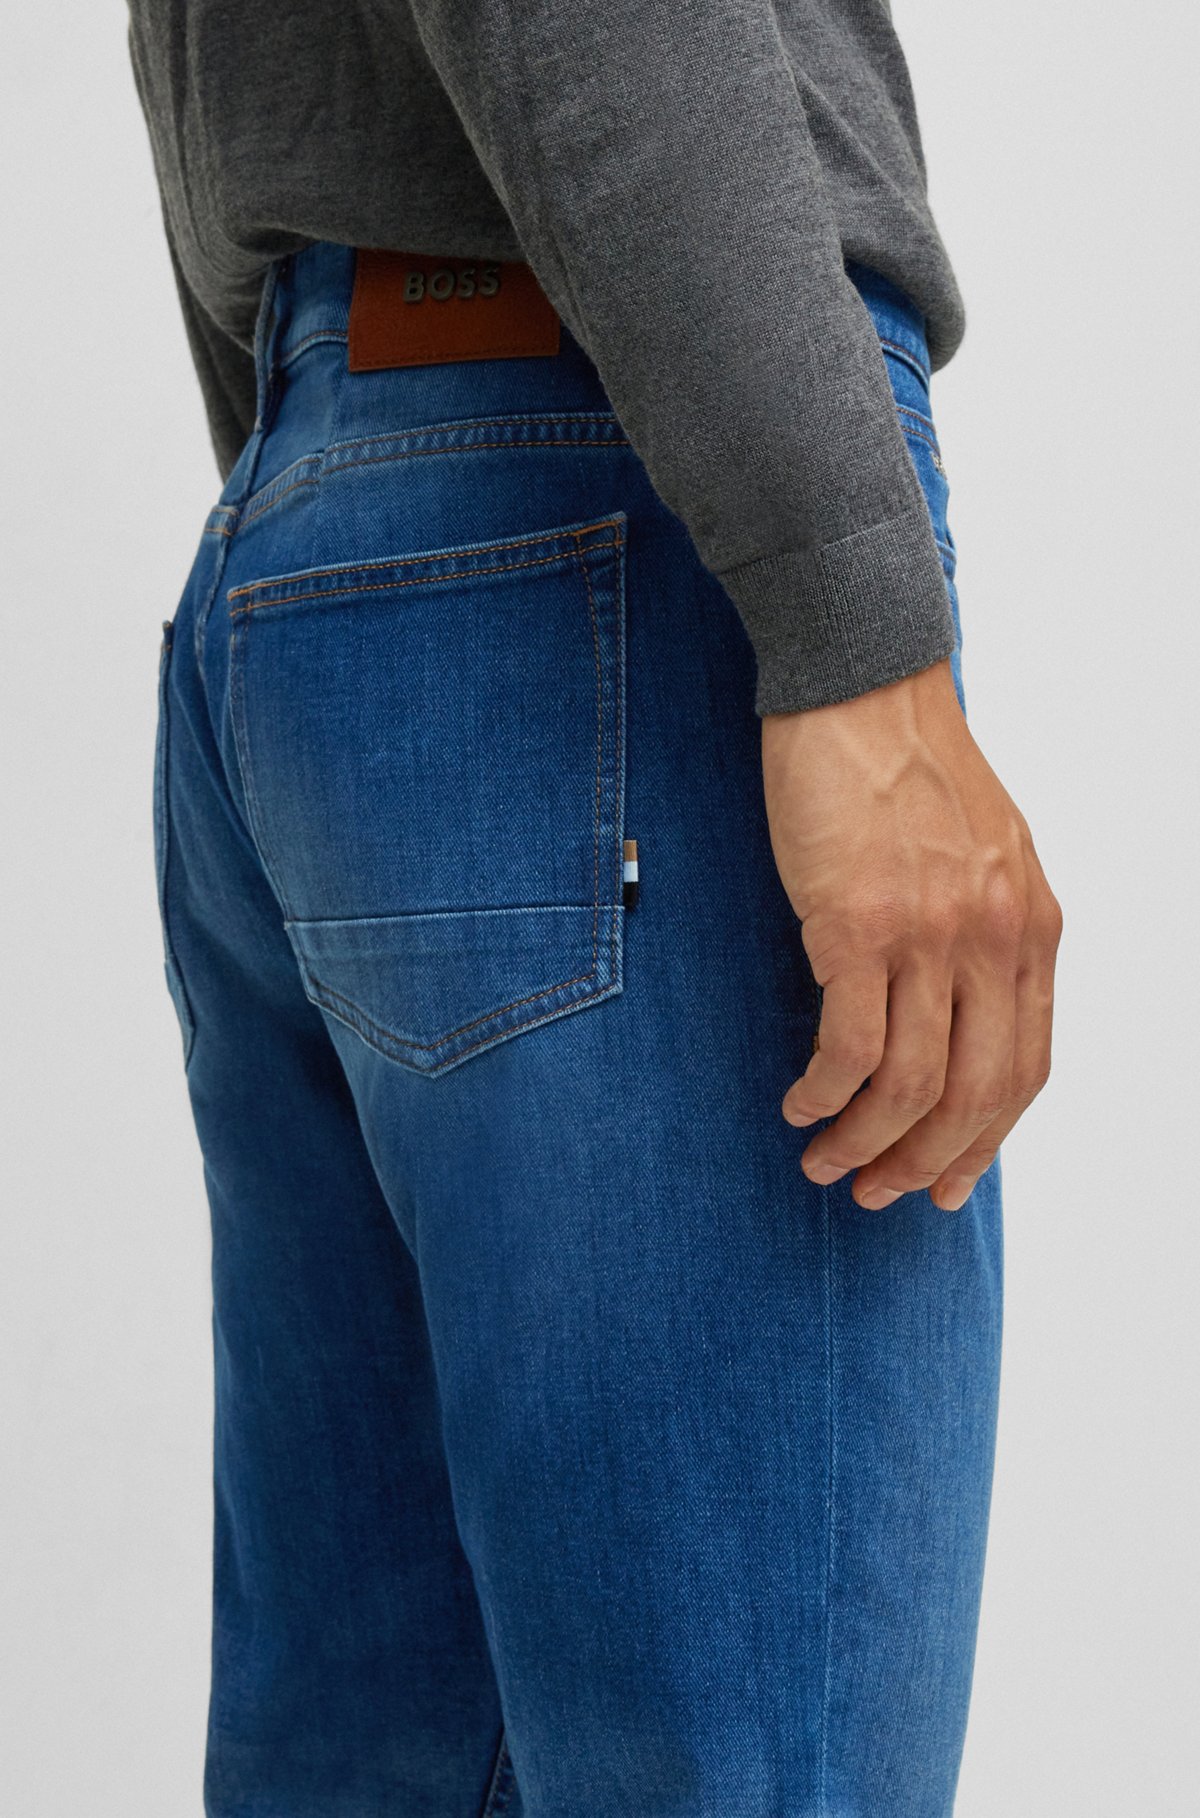 Interprete metodología voluntario BOSS - Slim-fit jeans in blue Italian denim with organic cotton